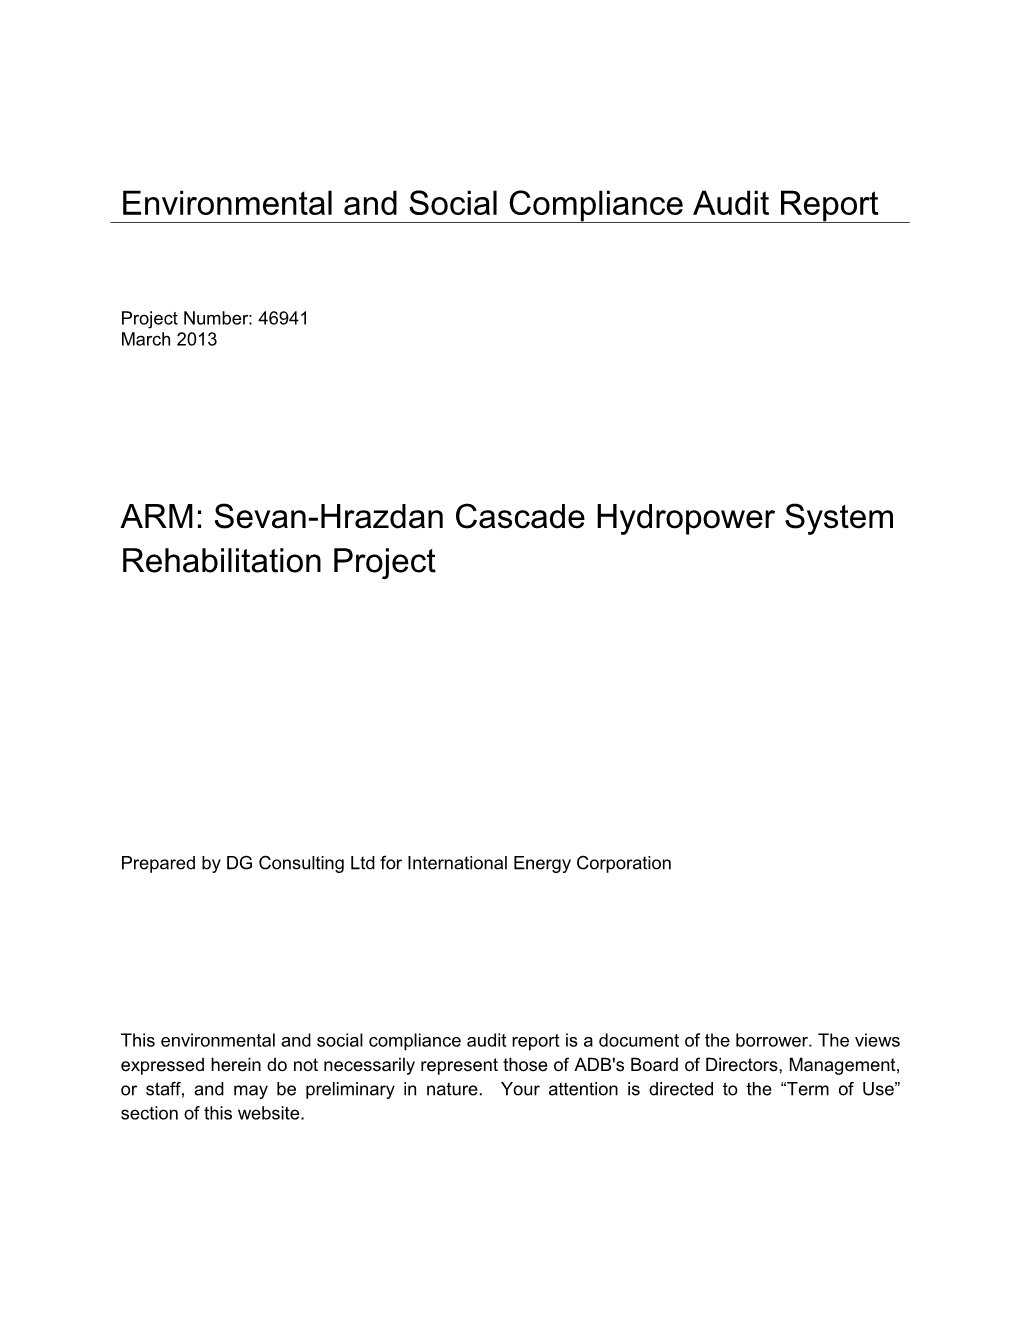 Sevan-Hrazdan Cascade Hydropower System Rehabilitation Project